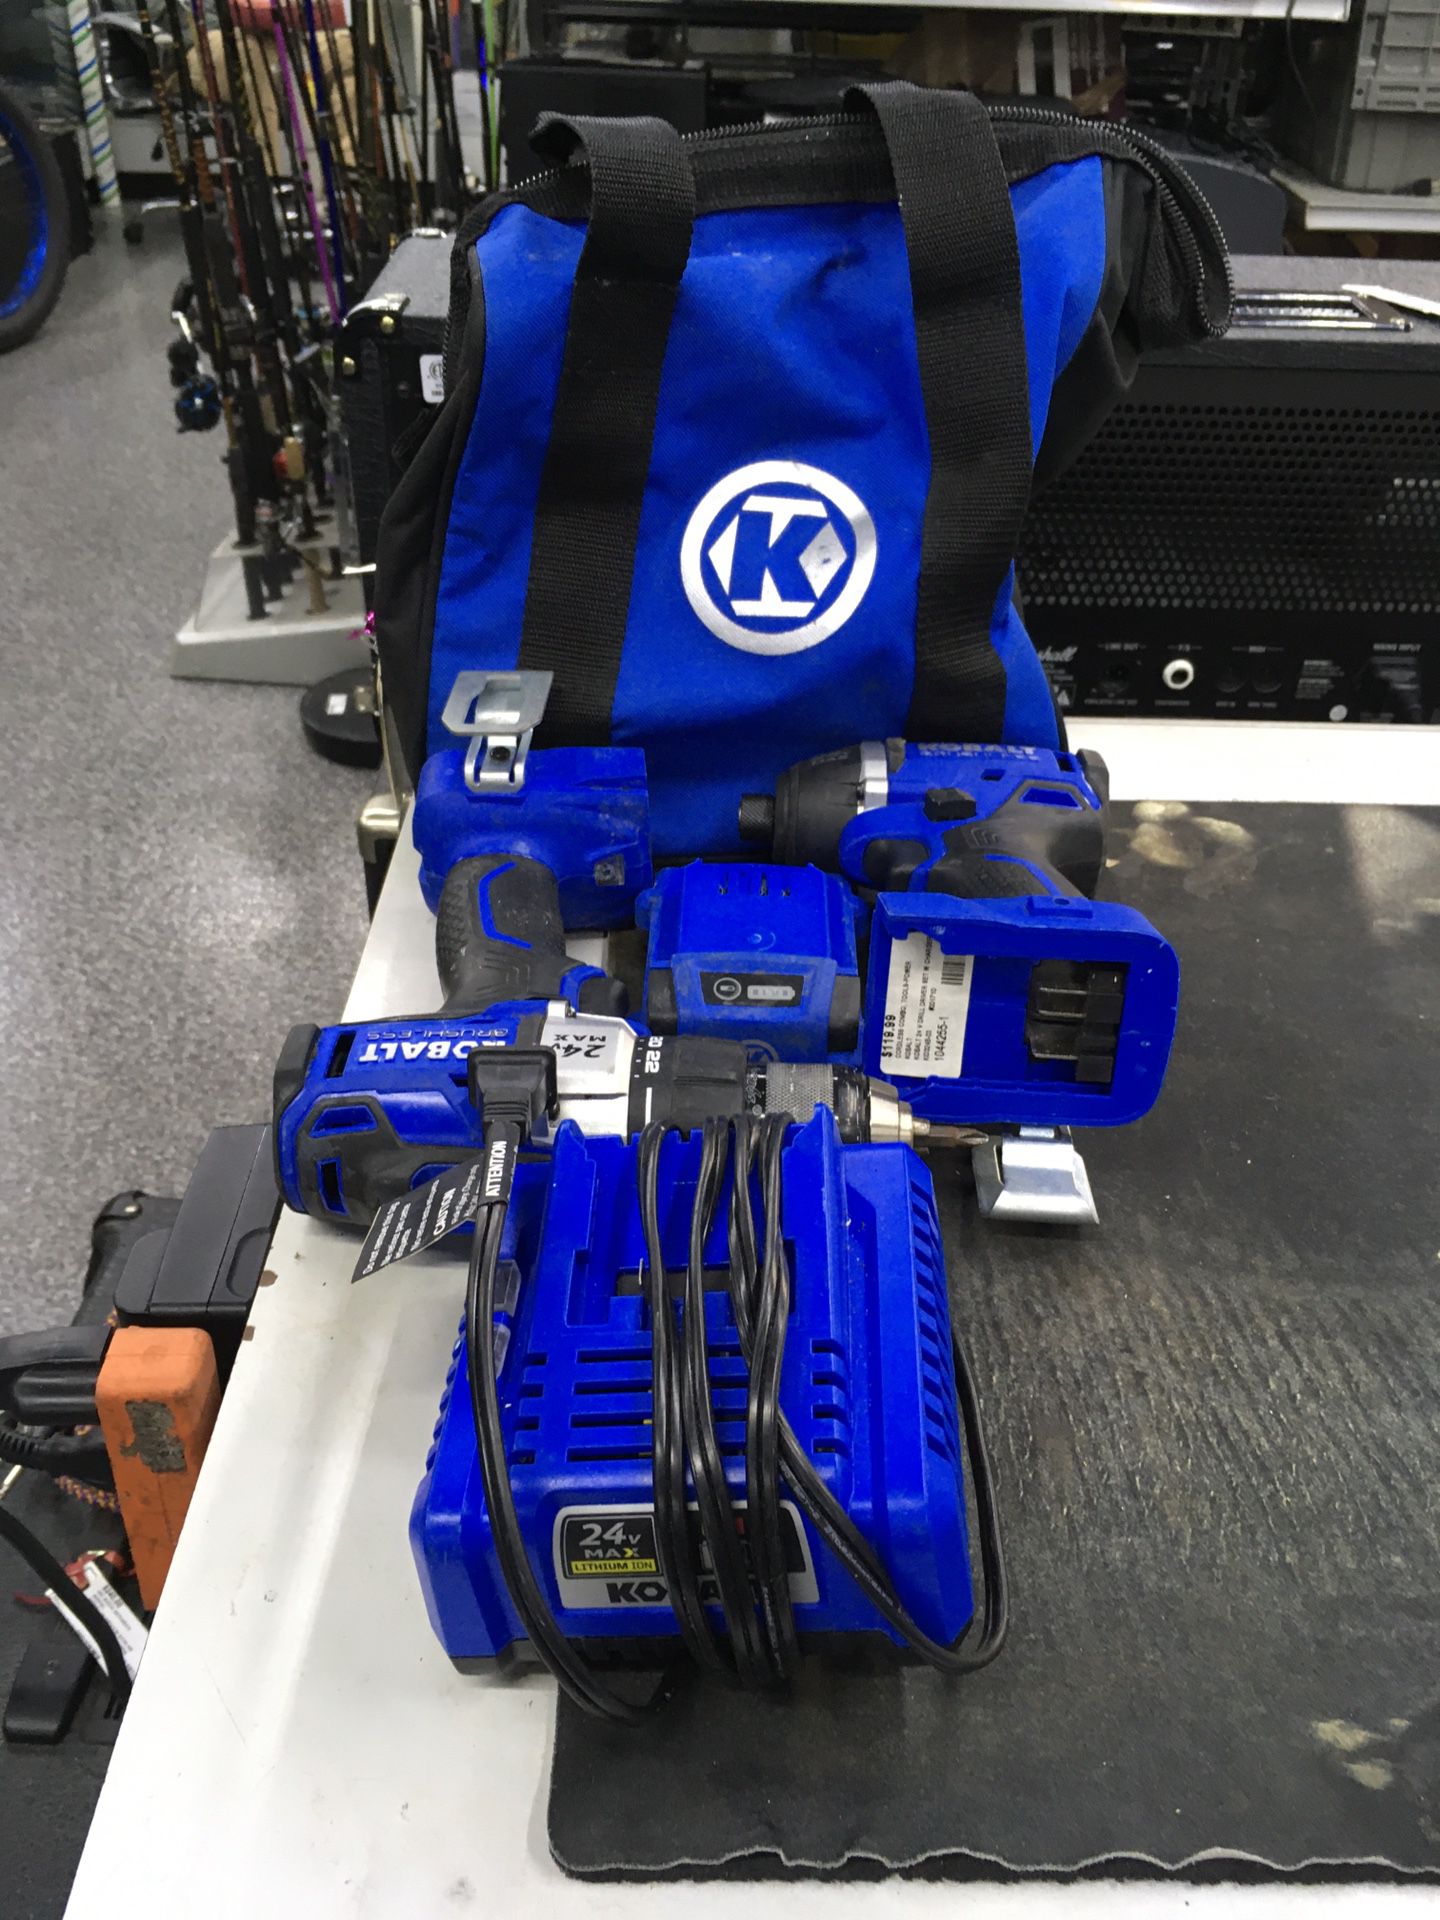 KOBALT 24V Drill Driver Set W/ Charger And Bag